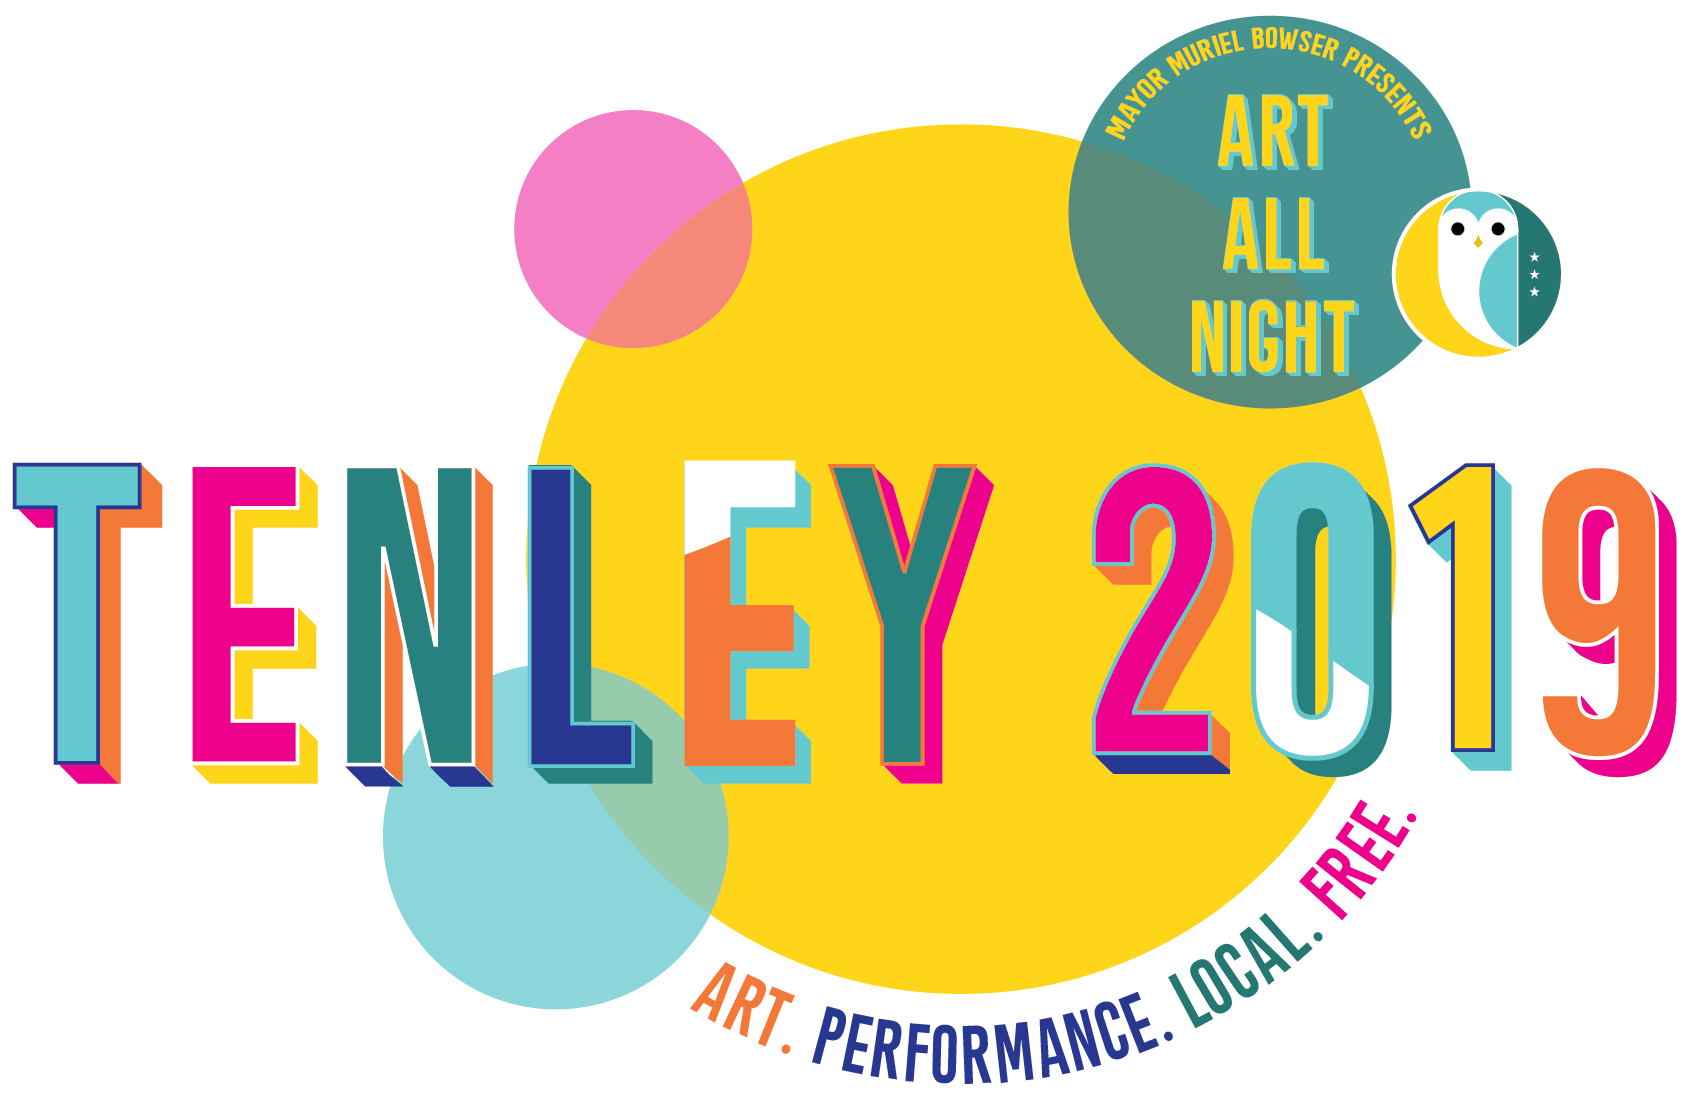 Mayor Muriel Bowser Presents: Art All Night - Tenley 2019. Art. Performance. Local. Free